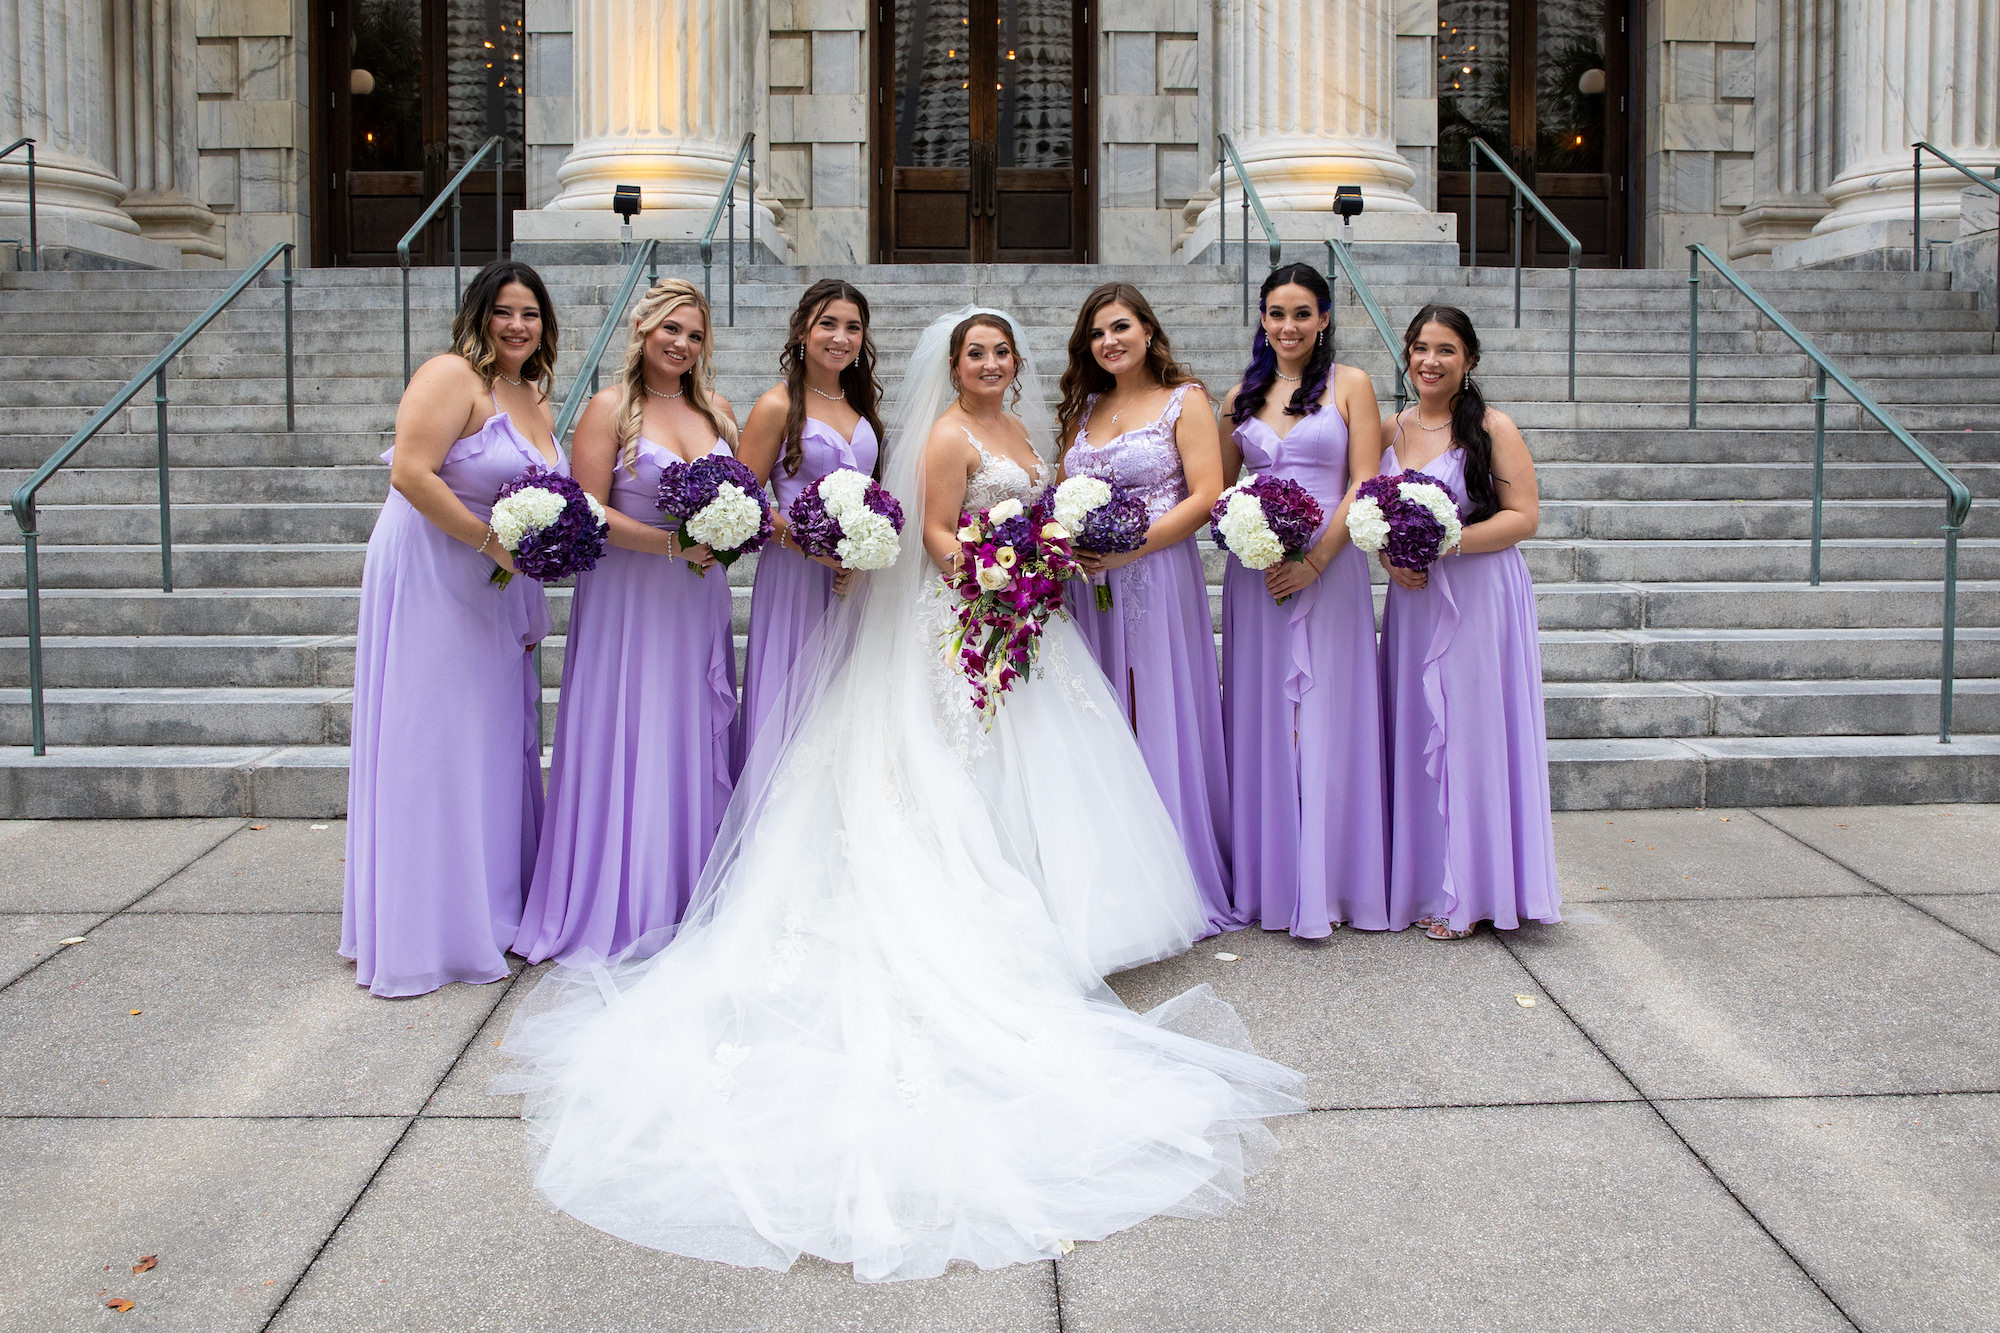 Bride and Bridesmaids in Floor Length Purple Bridesmaids Dresses Holding Purple and Cream Wedding Bouquets Portrait